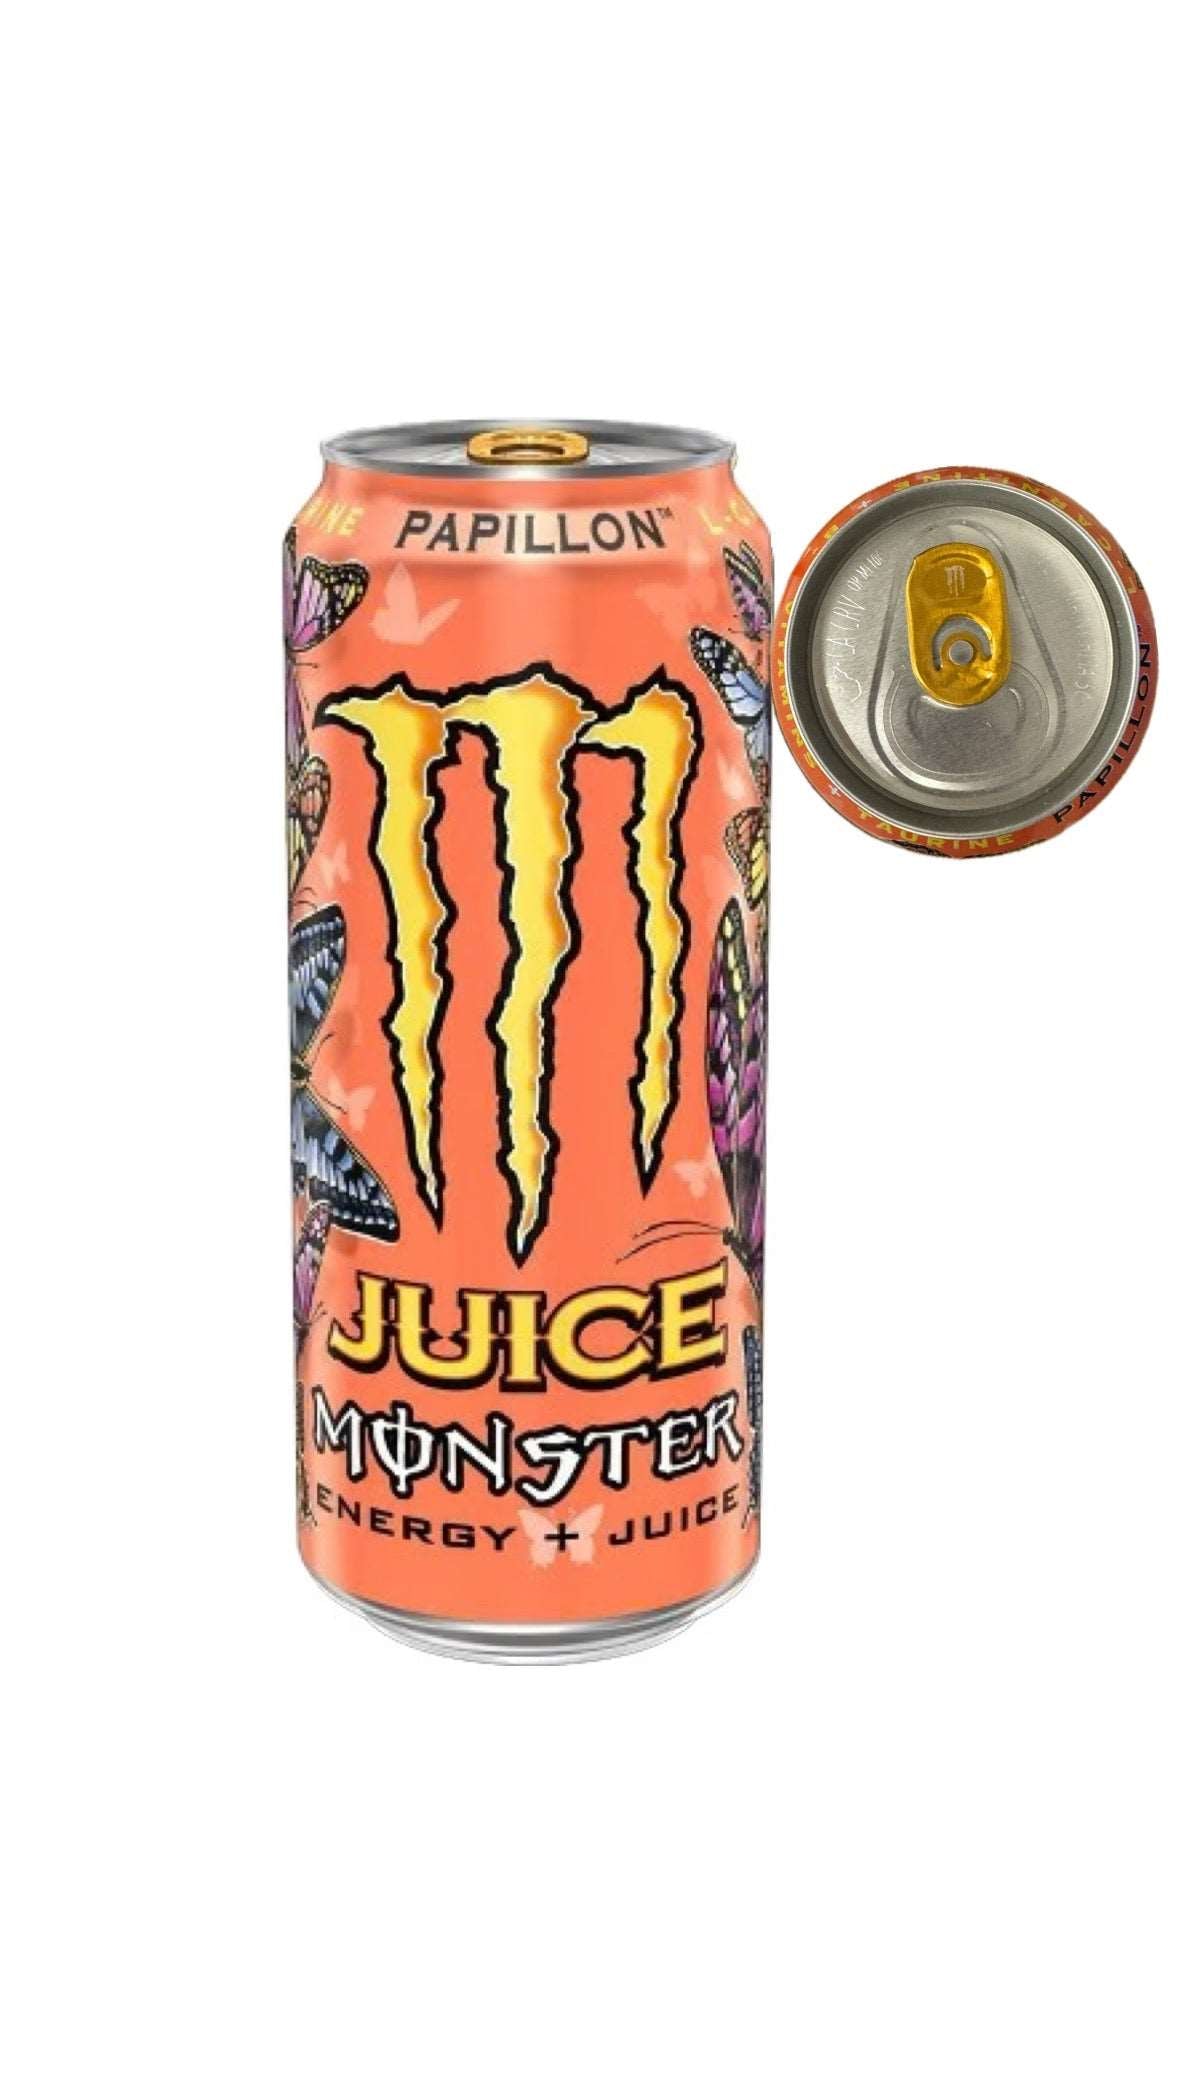 Monster Energy Juice Papillon USA sku: 0321 N d750 rare